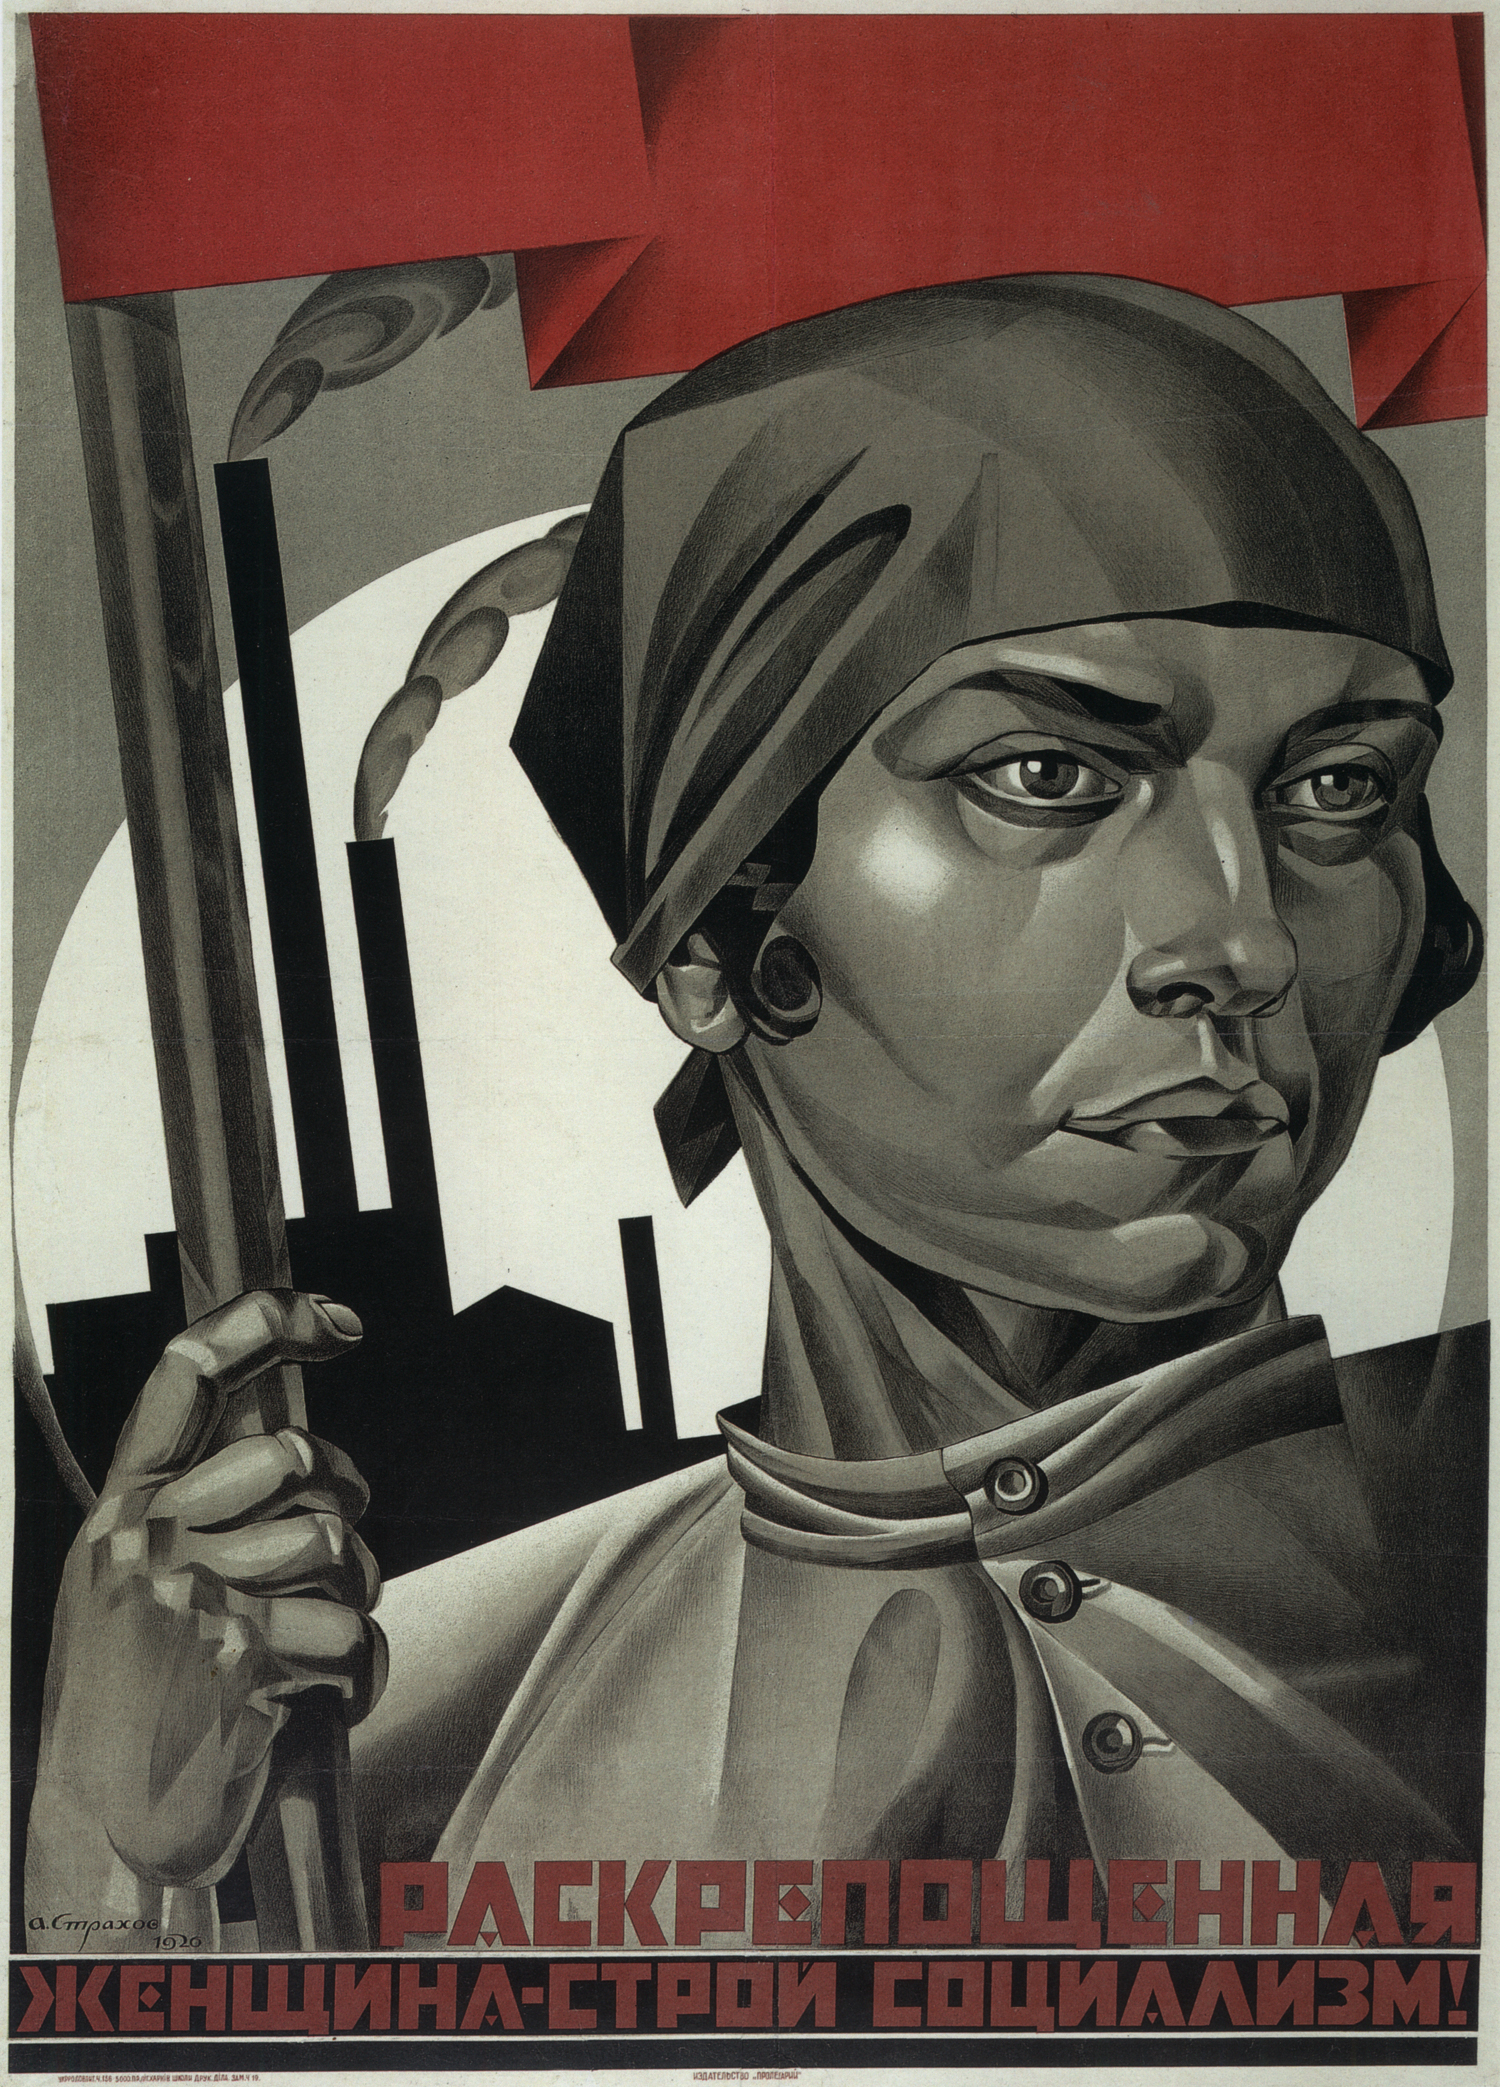 Donna emancipata: costruisci il socialismo! by Adolf Strakhov - 1926 Tate Modern